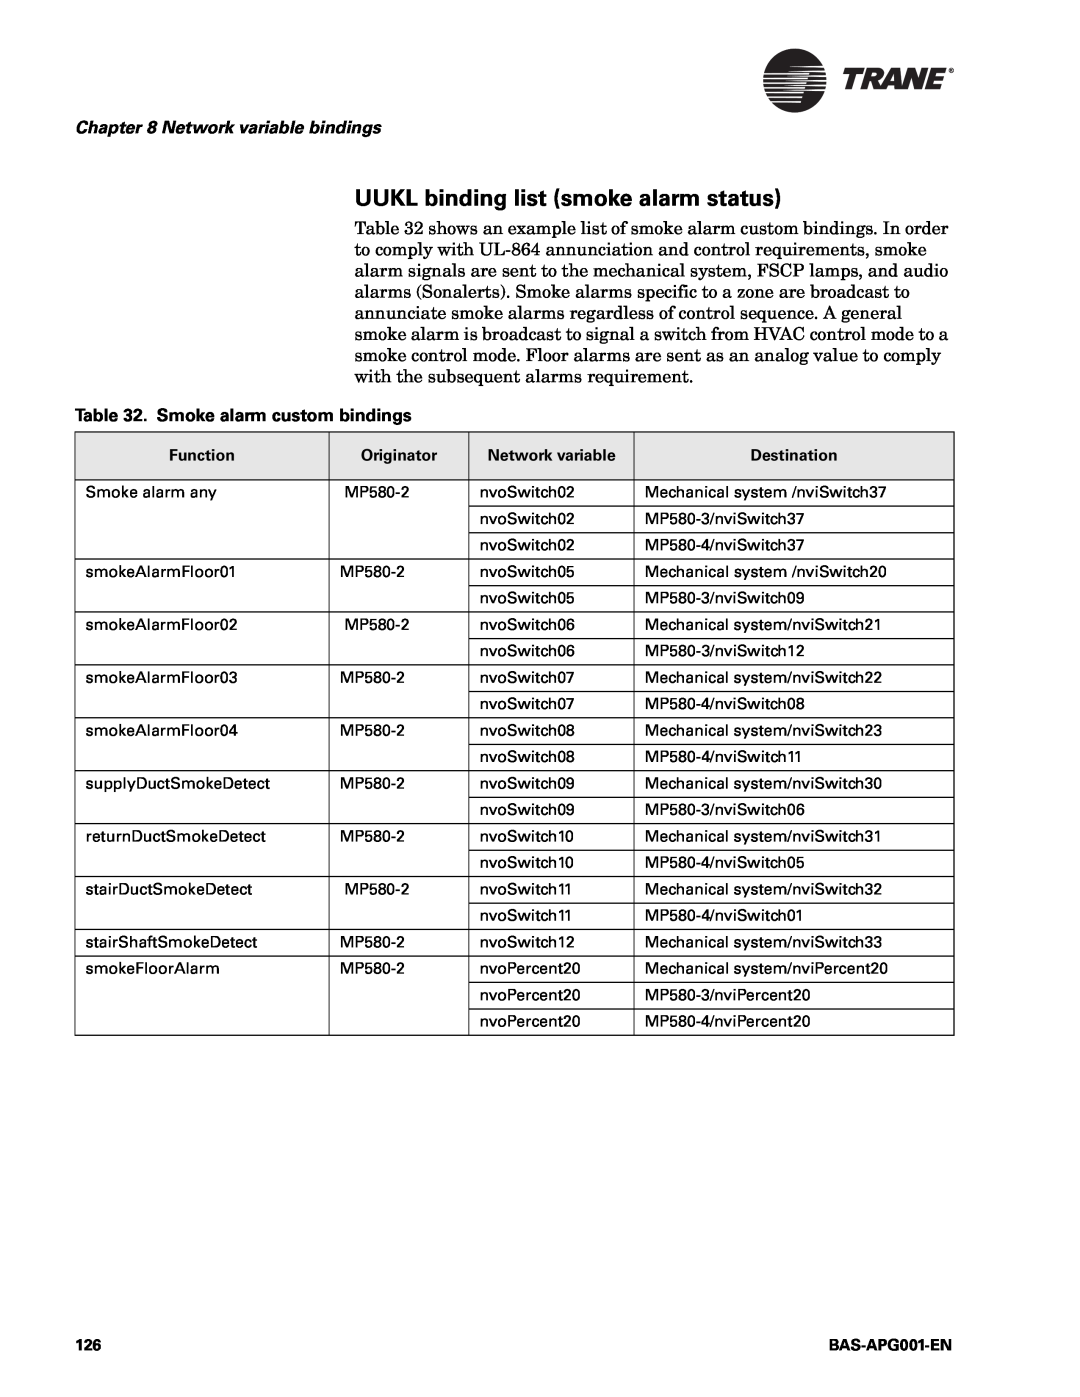 Trane BAS-APG001-EN manual UUKL binding list smoke alarm status, Network variable bindings, Smoke alarm custom bindings 